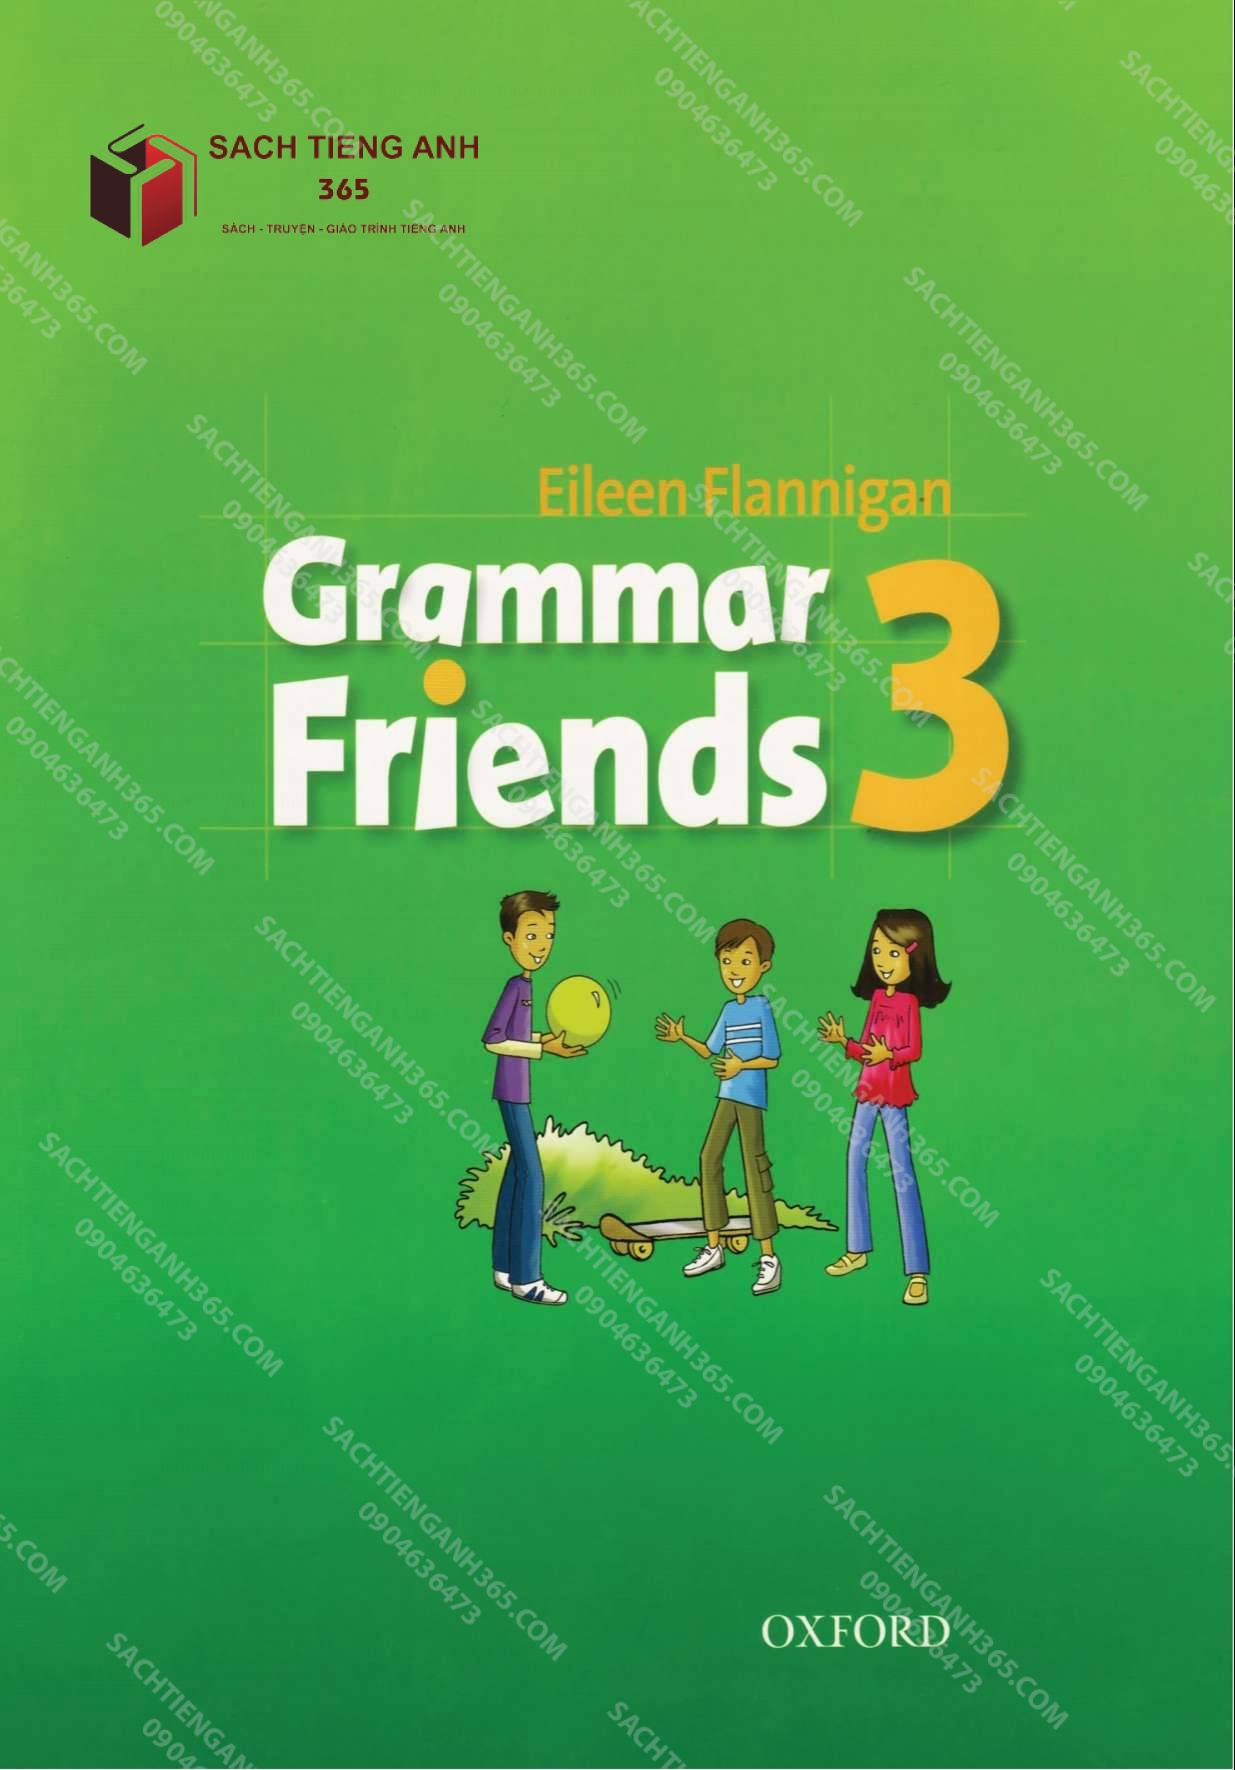 Grammar Friends 3 - Student book